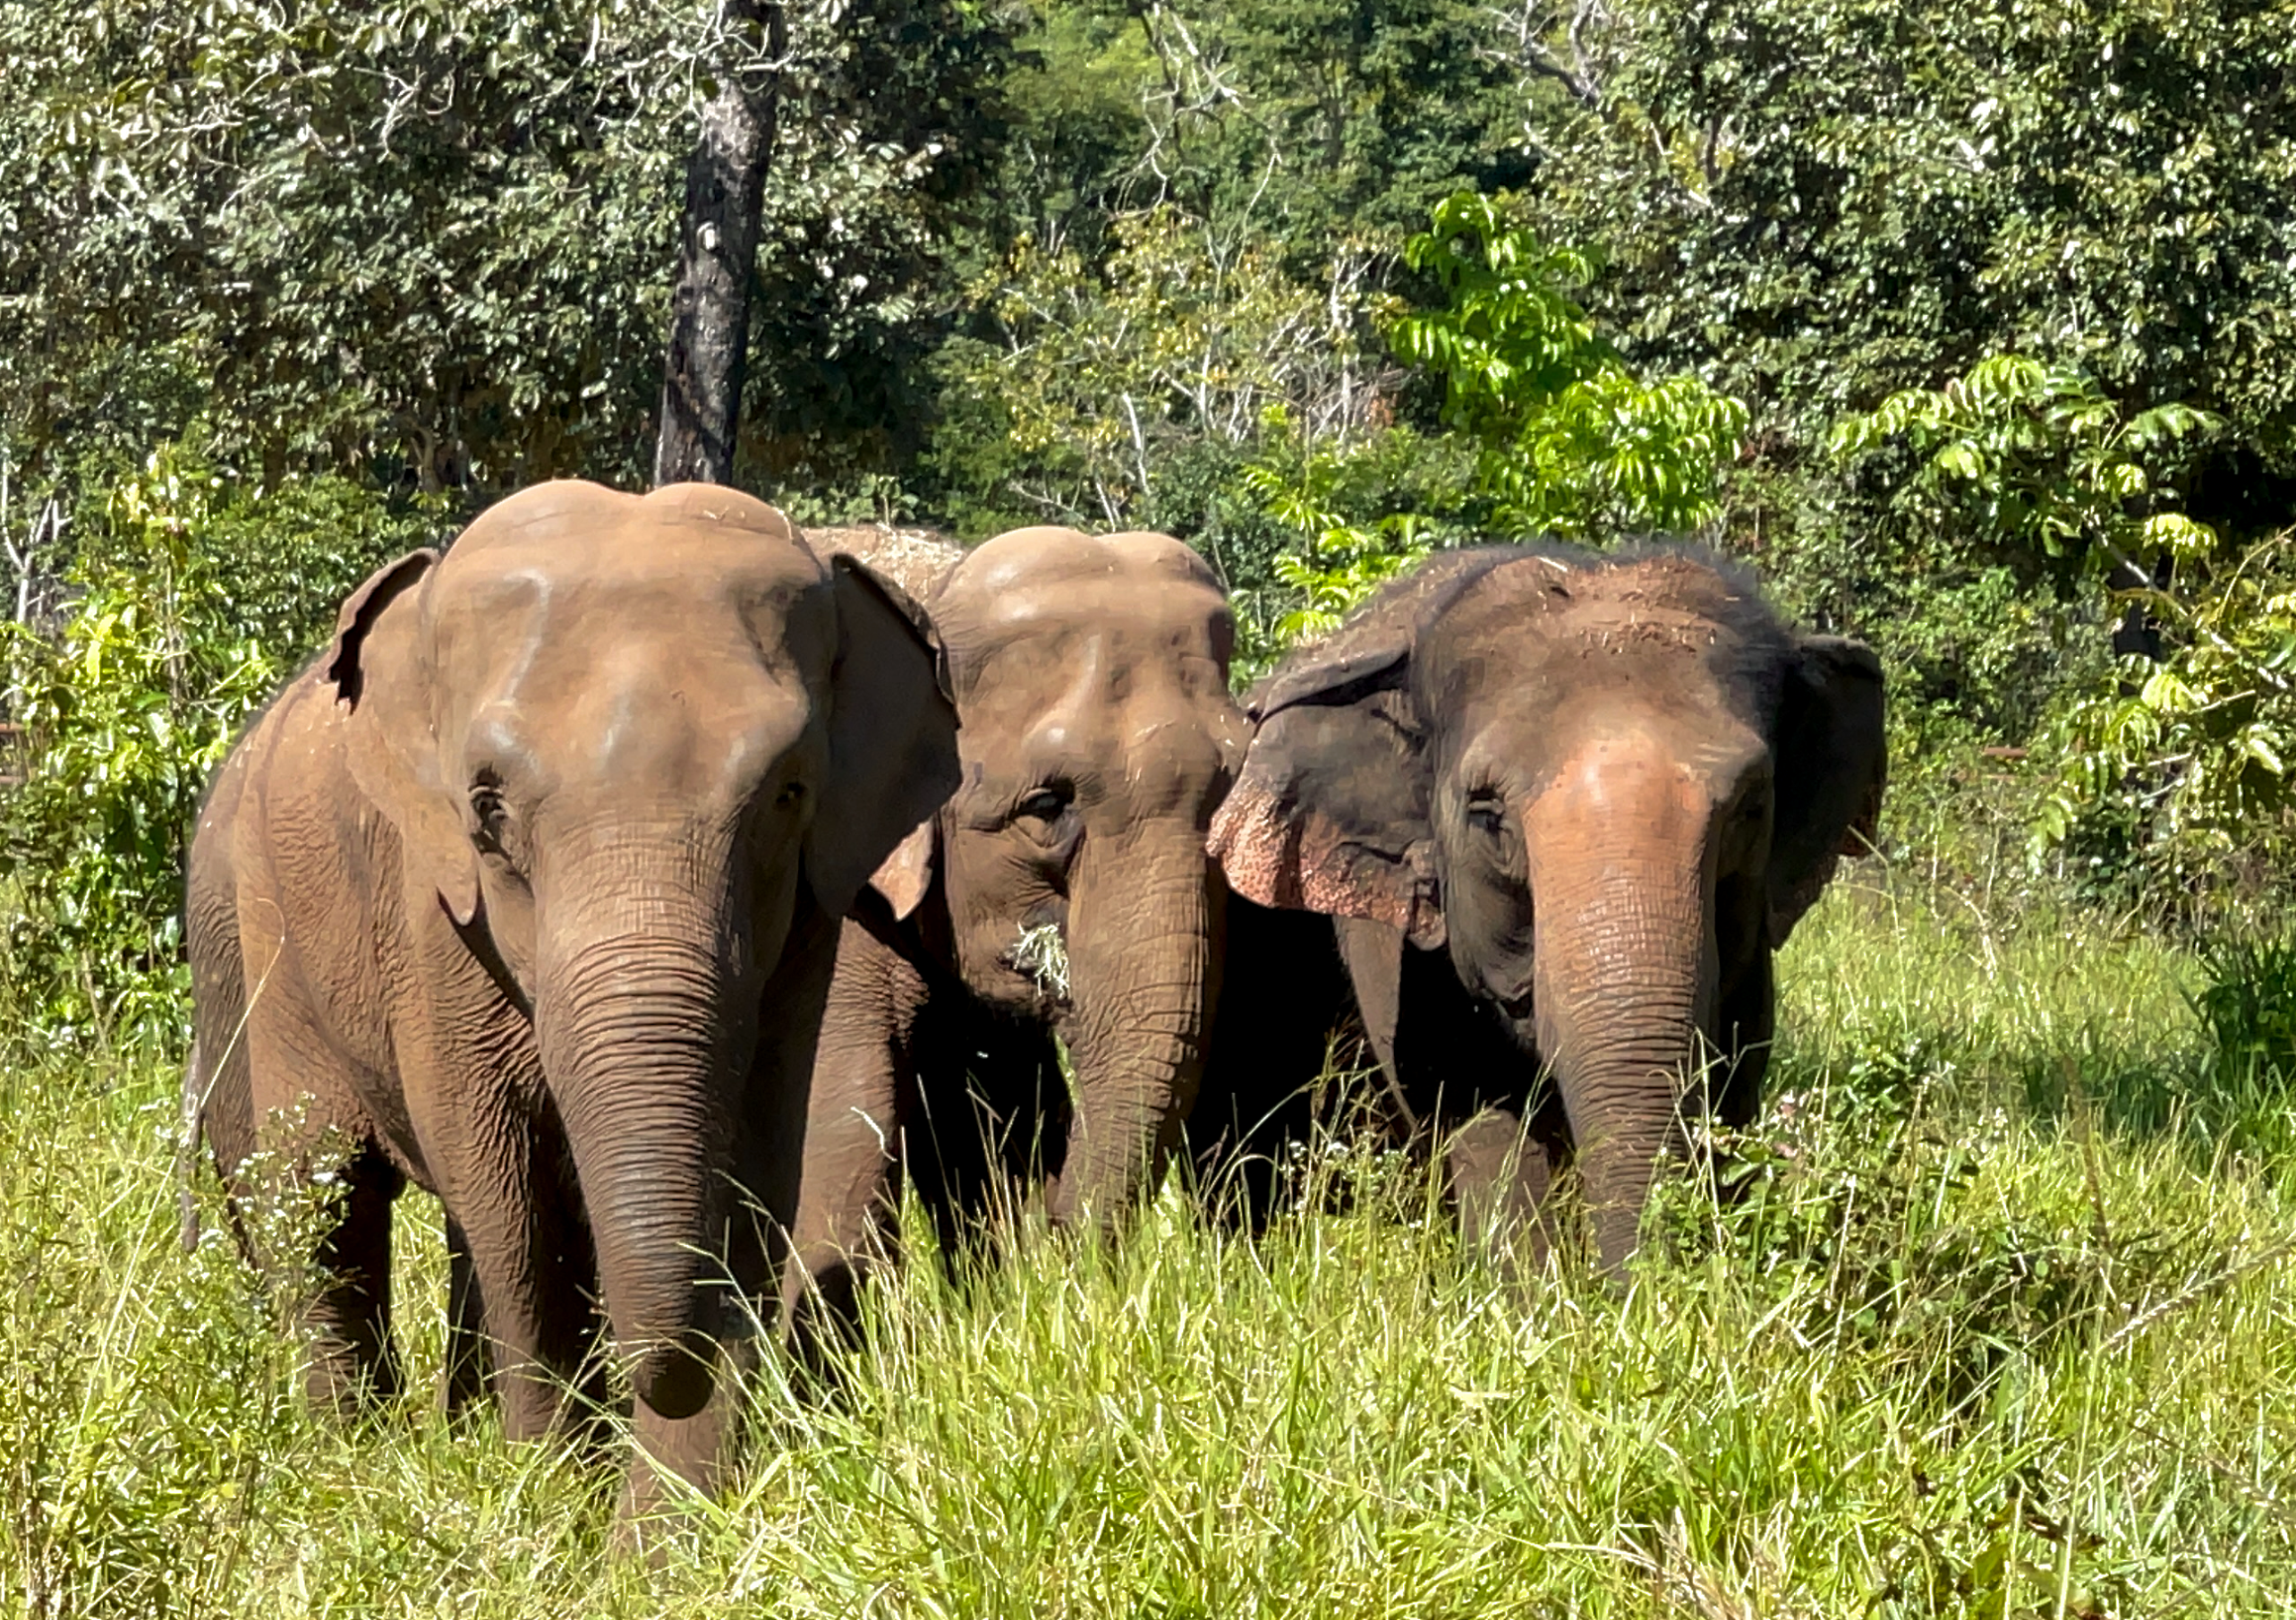 Global Sanctuary for Elephants